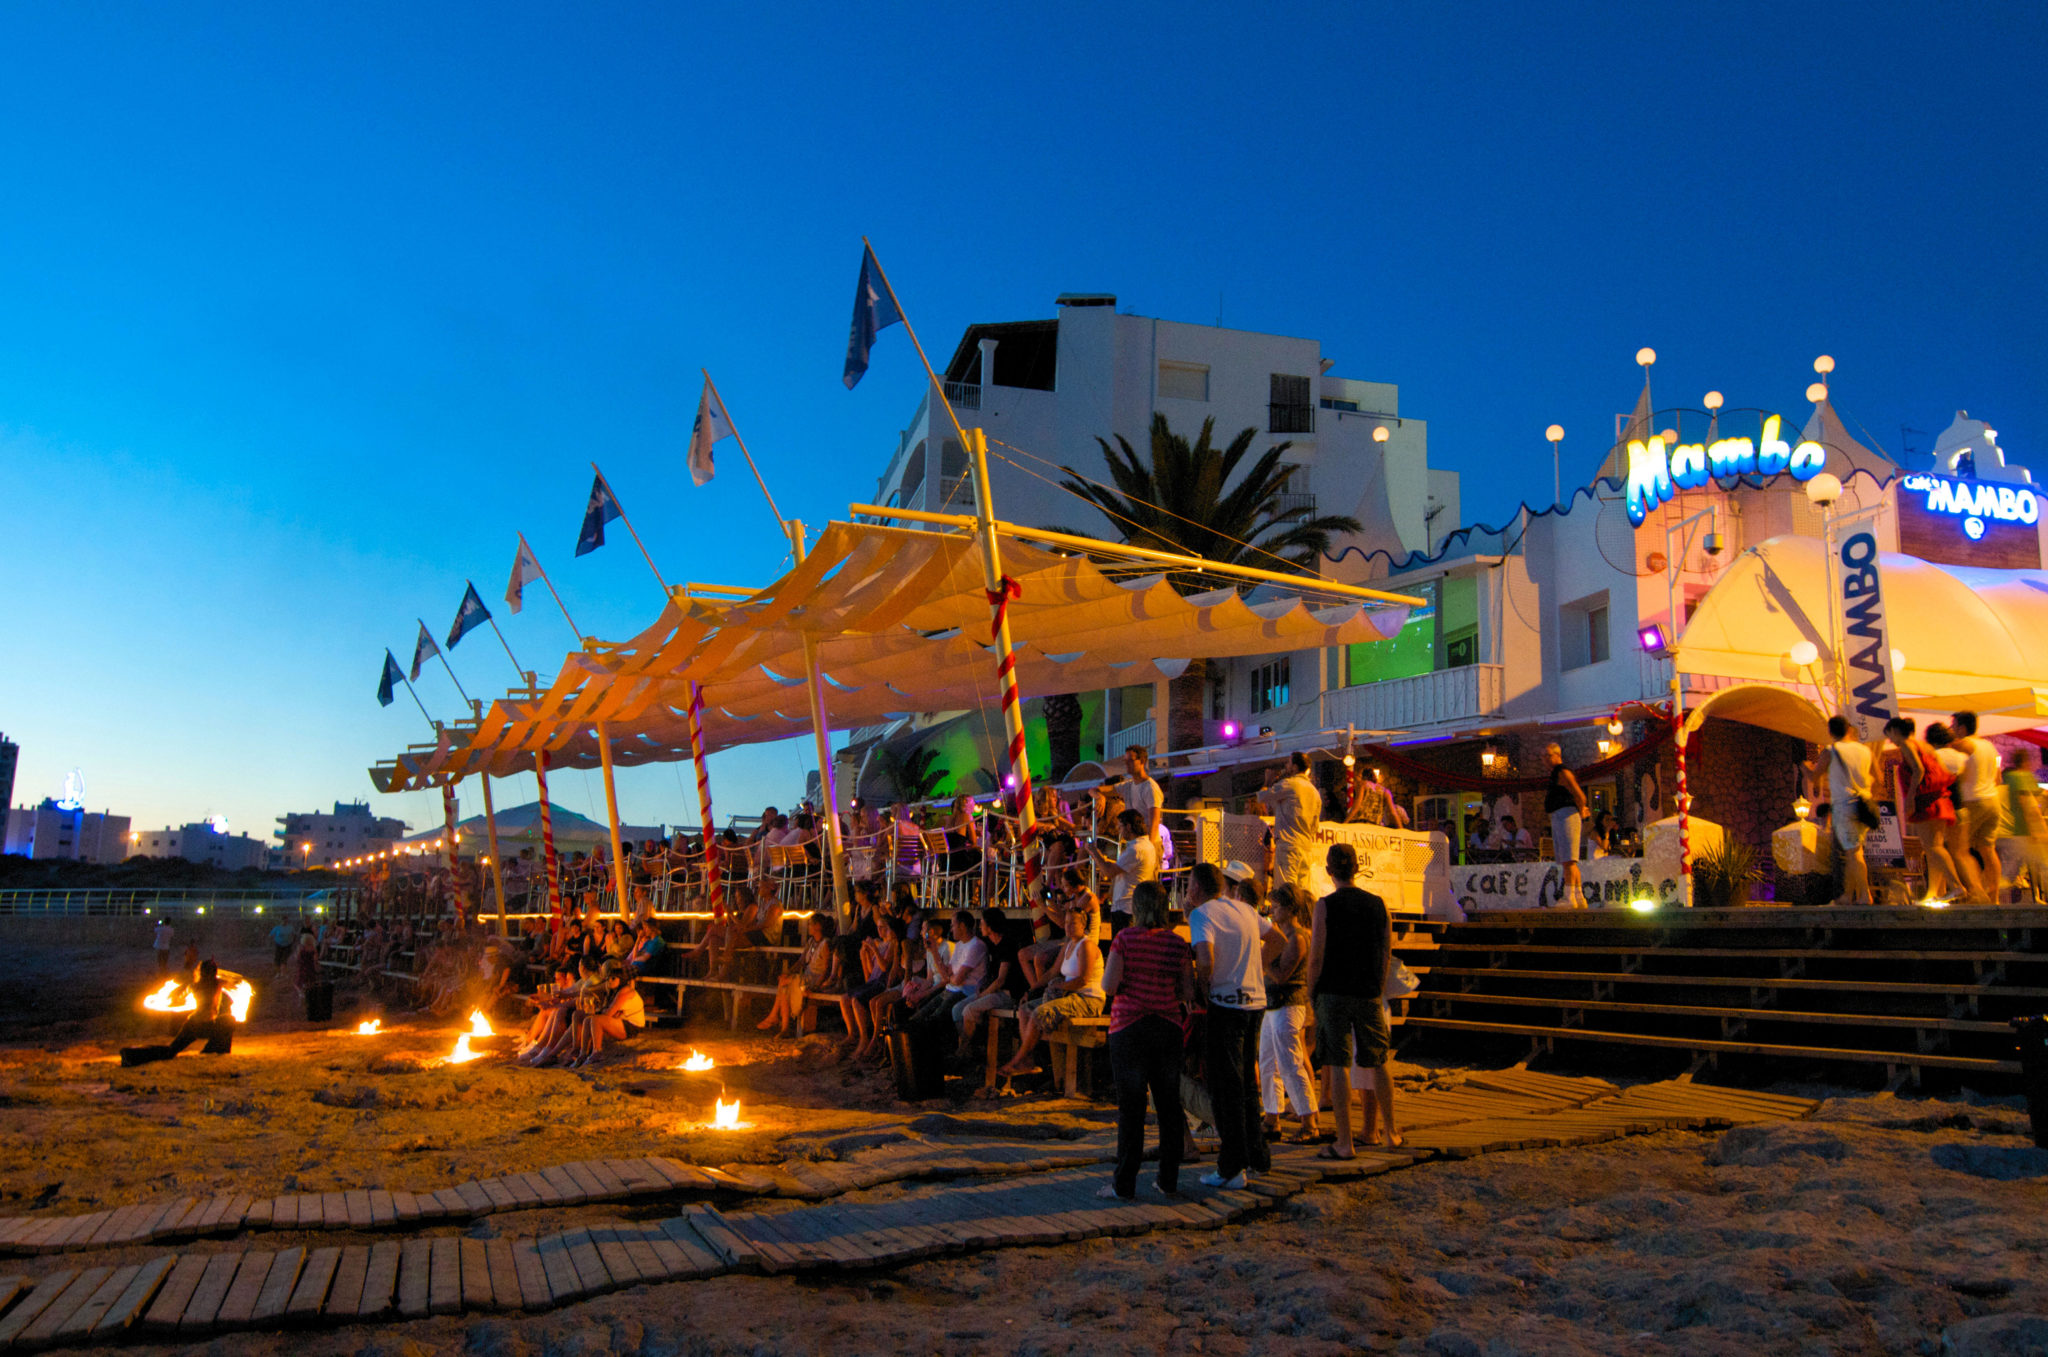 Cafe Mambo in San Antonio, Ibiza.  Image: Imagebroker / Alamy Stock Photo